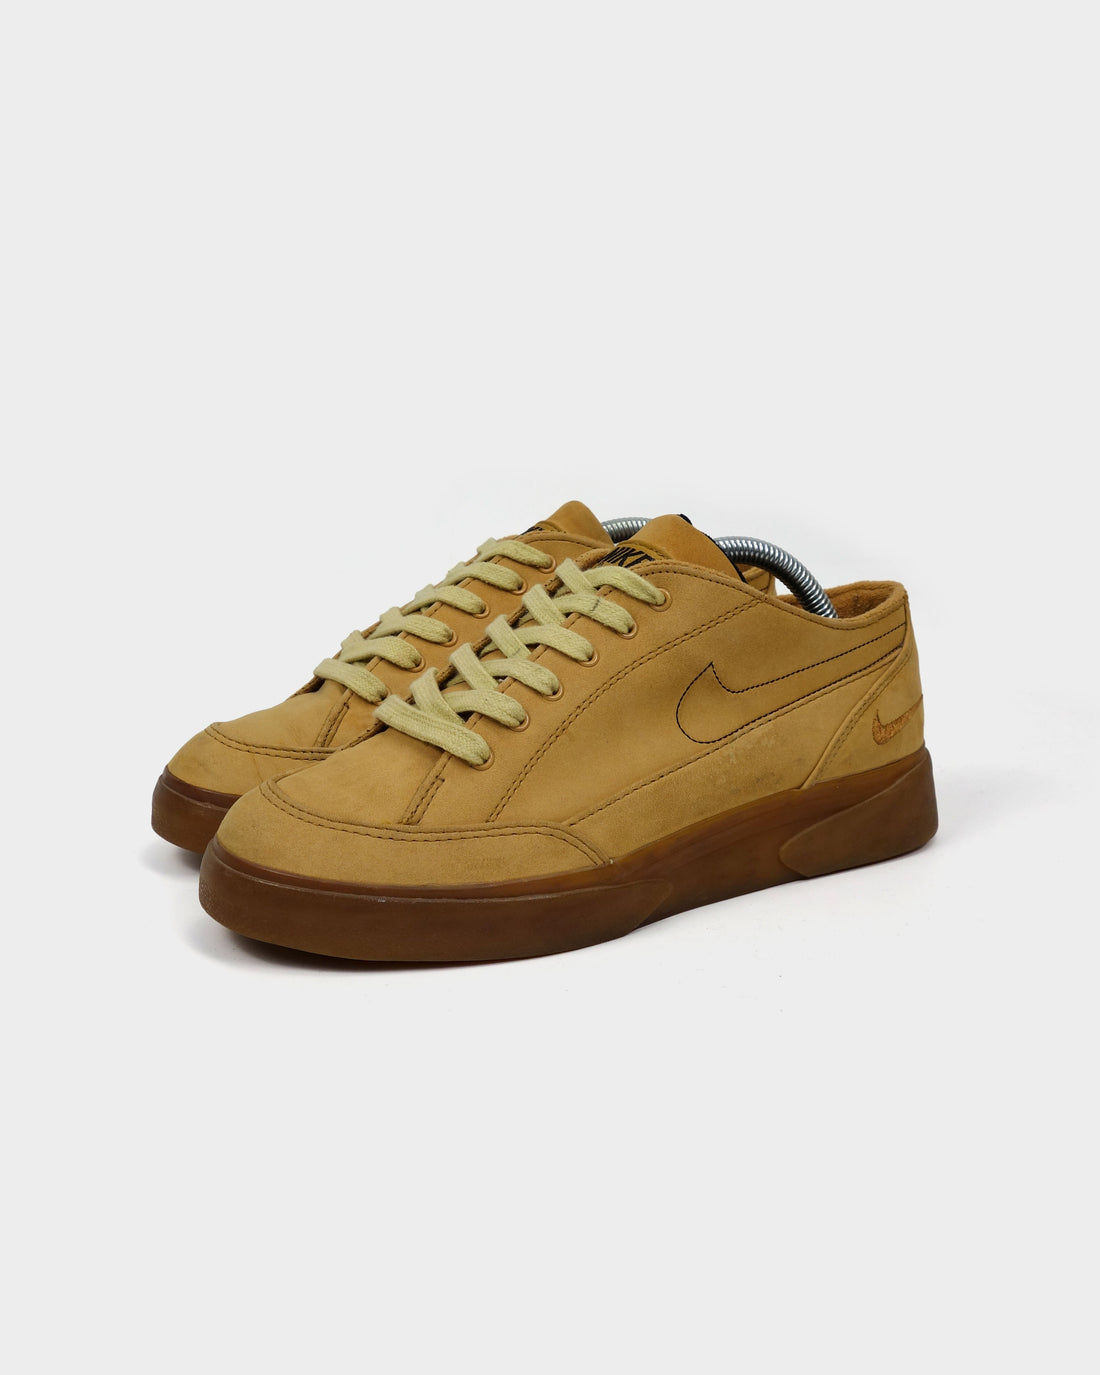 Nike GTS "WOOD" Brown Shoes 1995